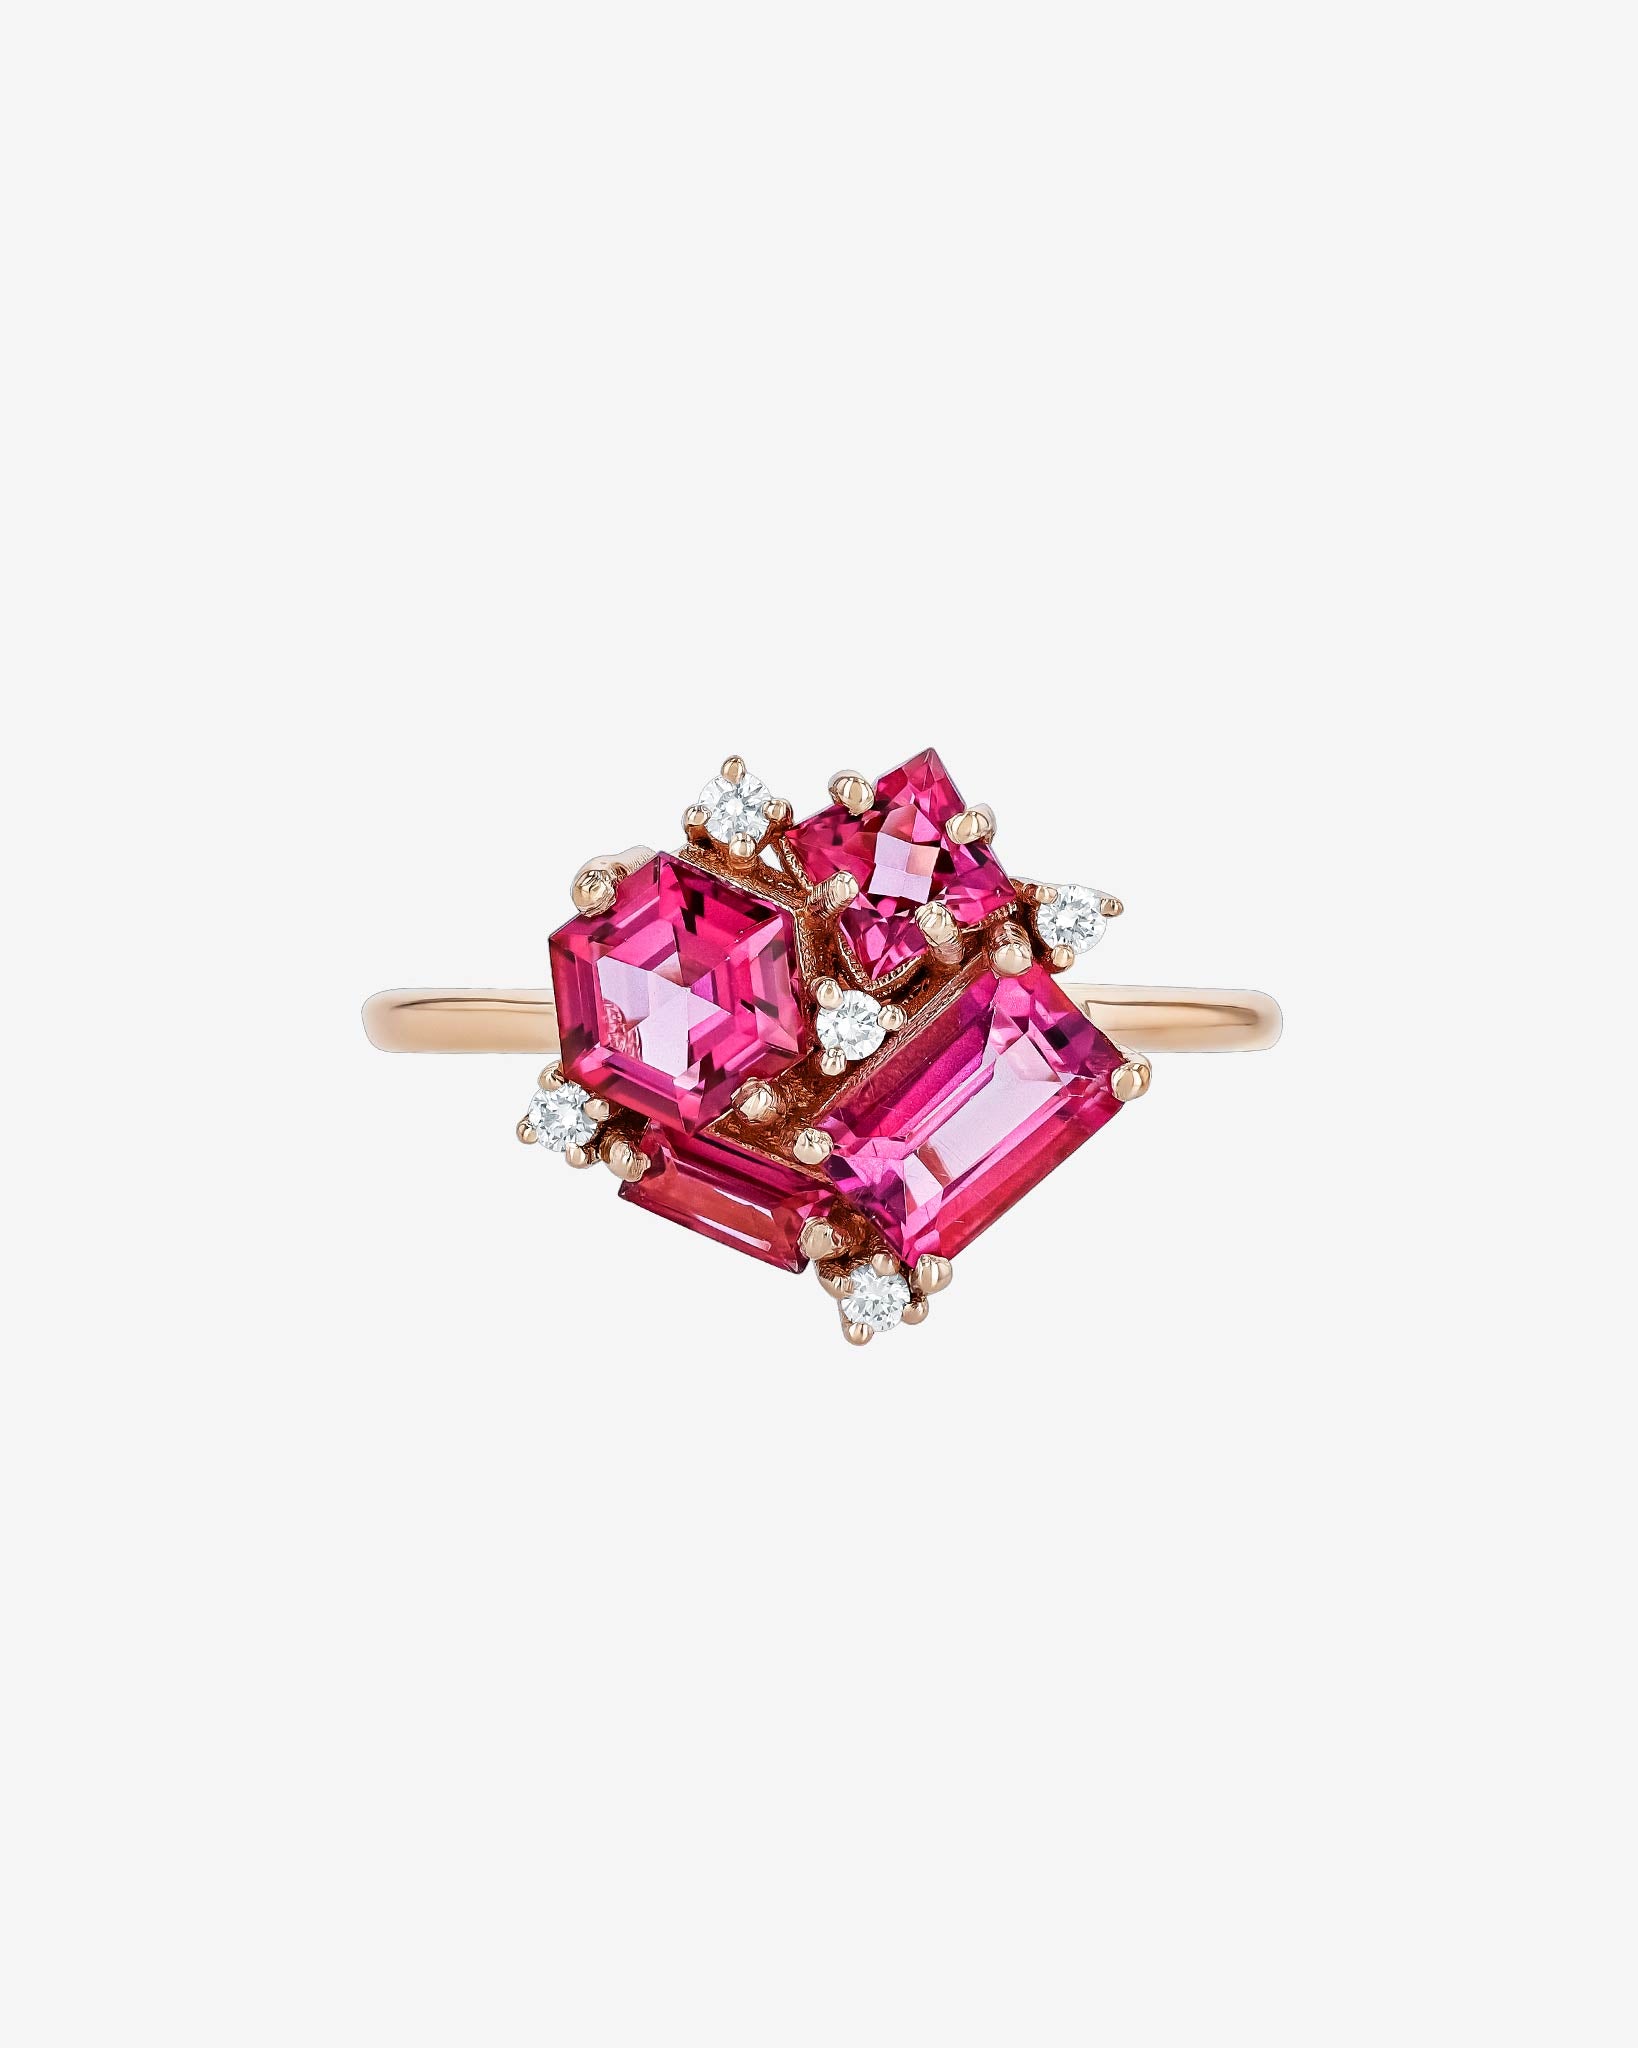 Kalan By Suzanne Kalan Amalfi Pink Topaz Blossom Ring in 14k rose gold